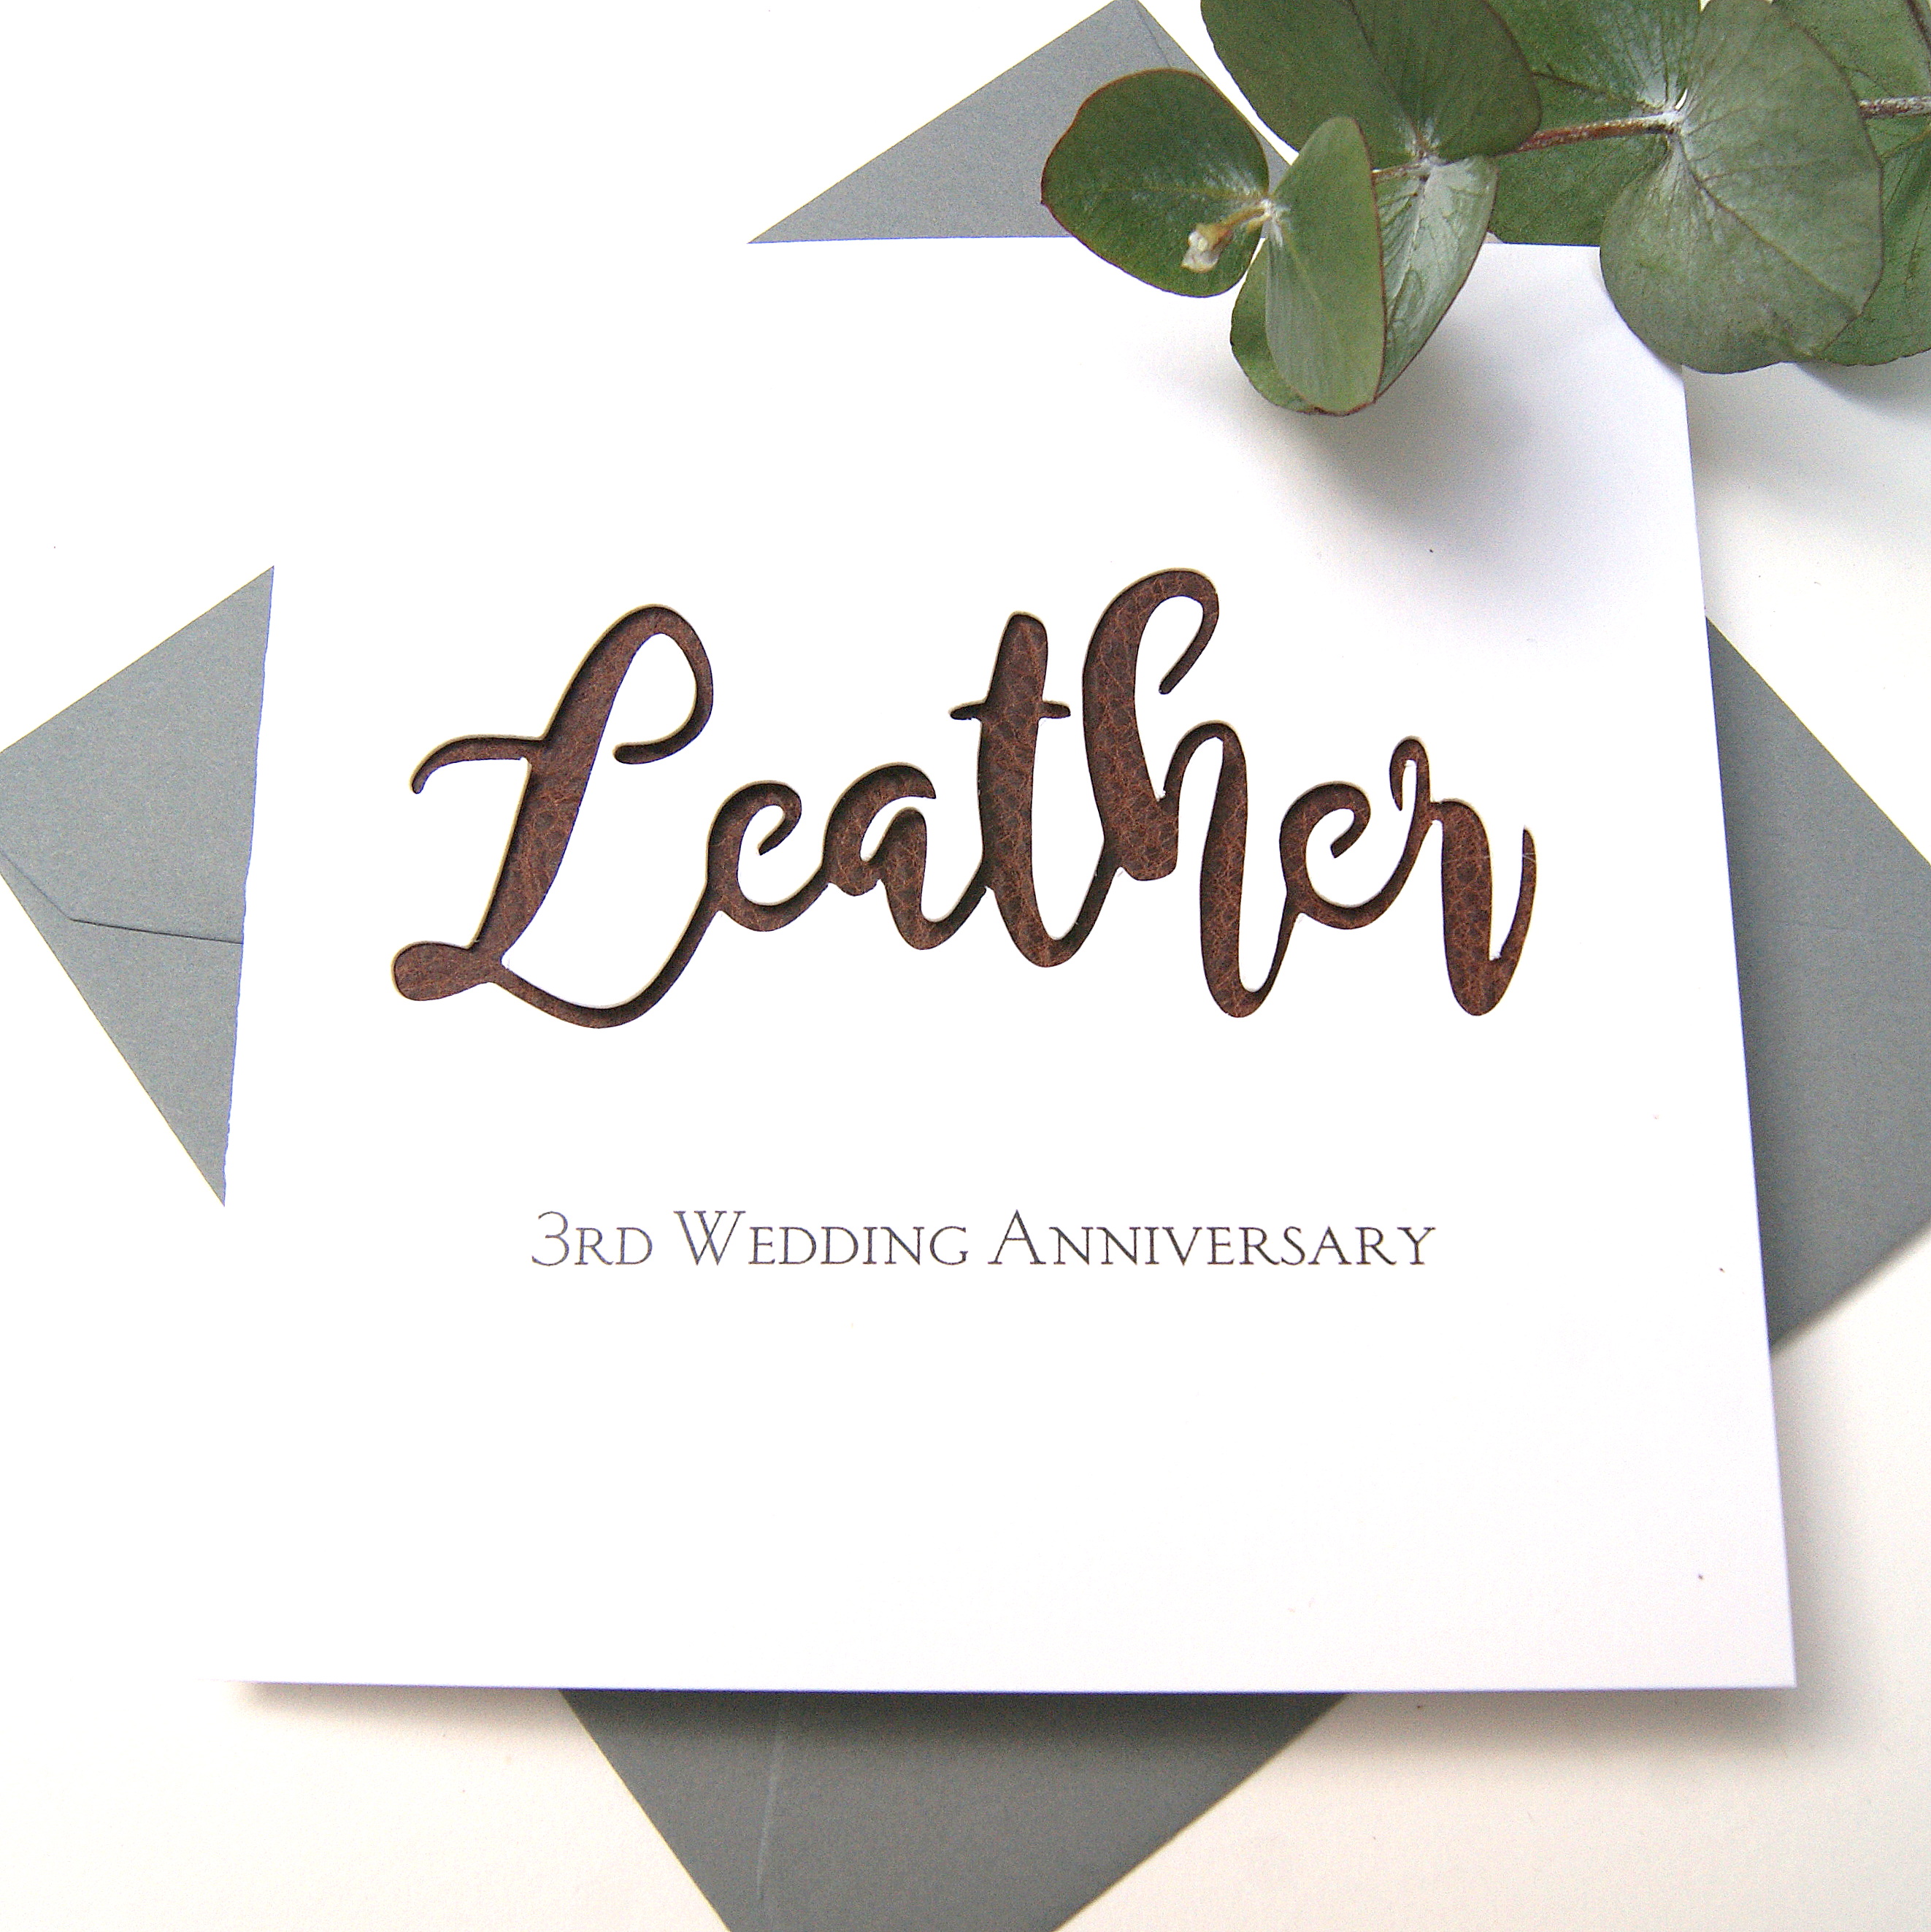 Leather 3rd Wedding Anniversary Card Shop Online Hummingbird Card Company